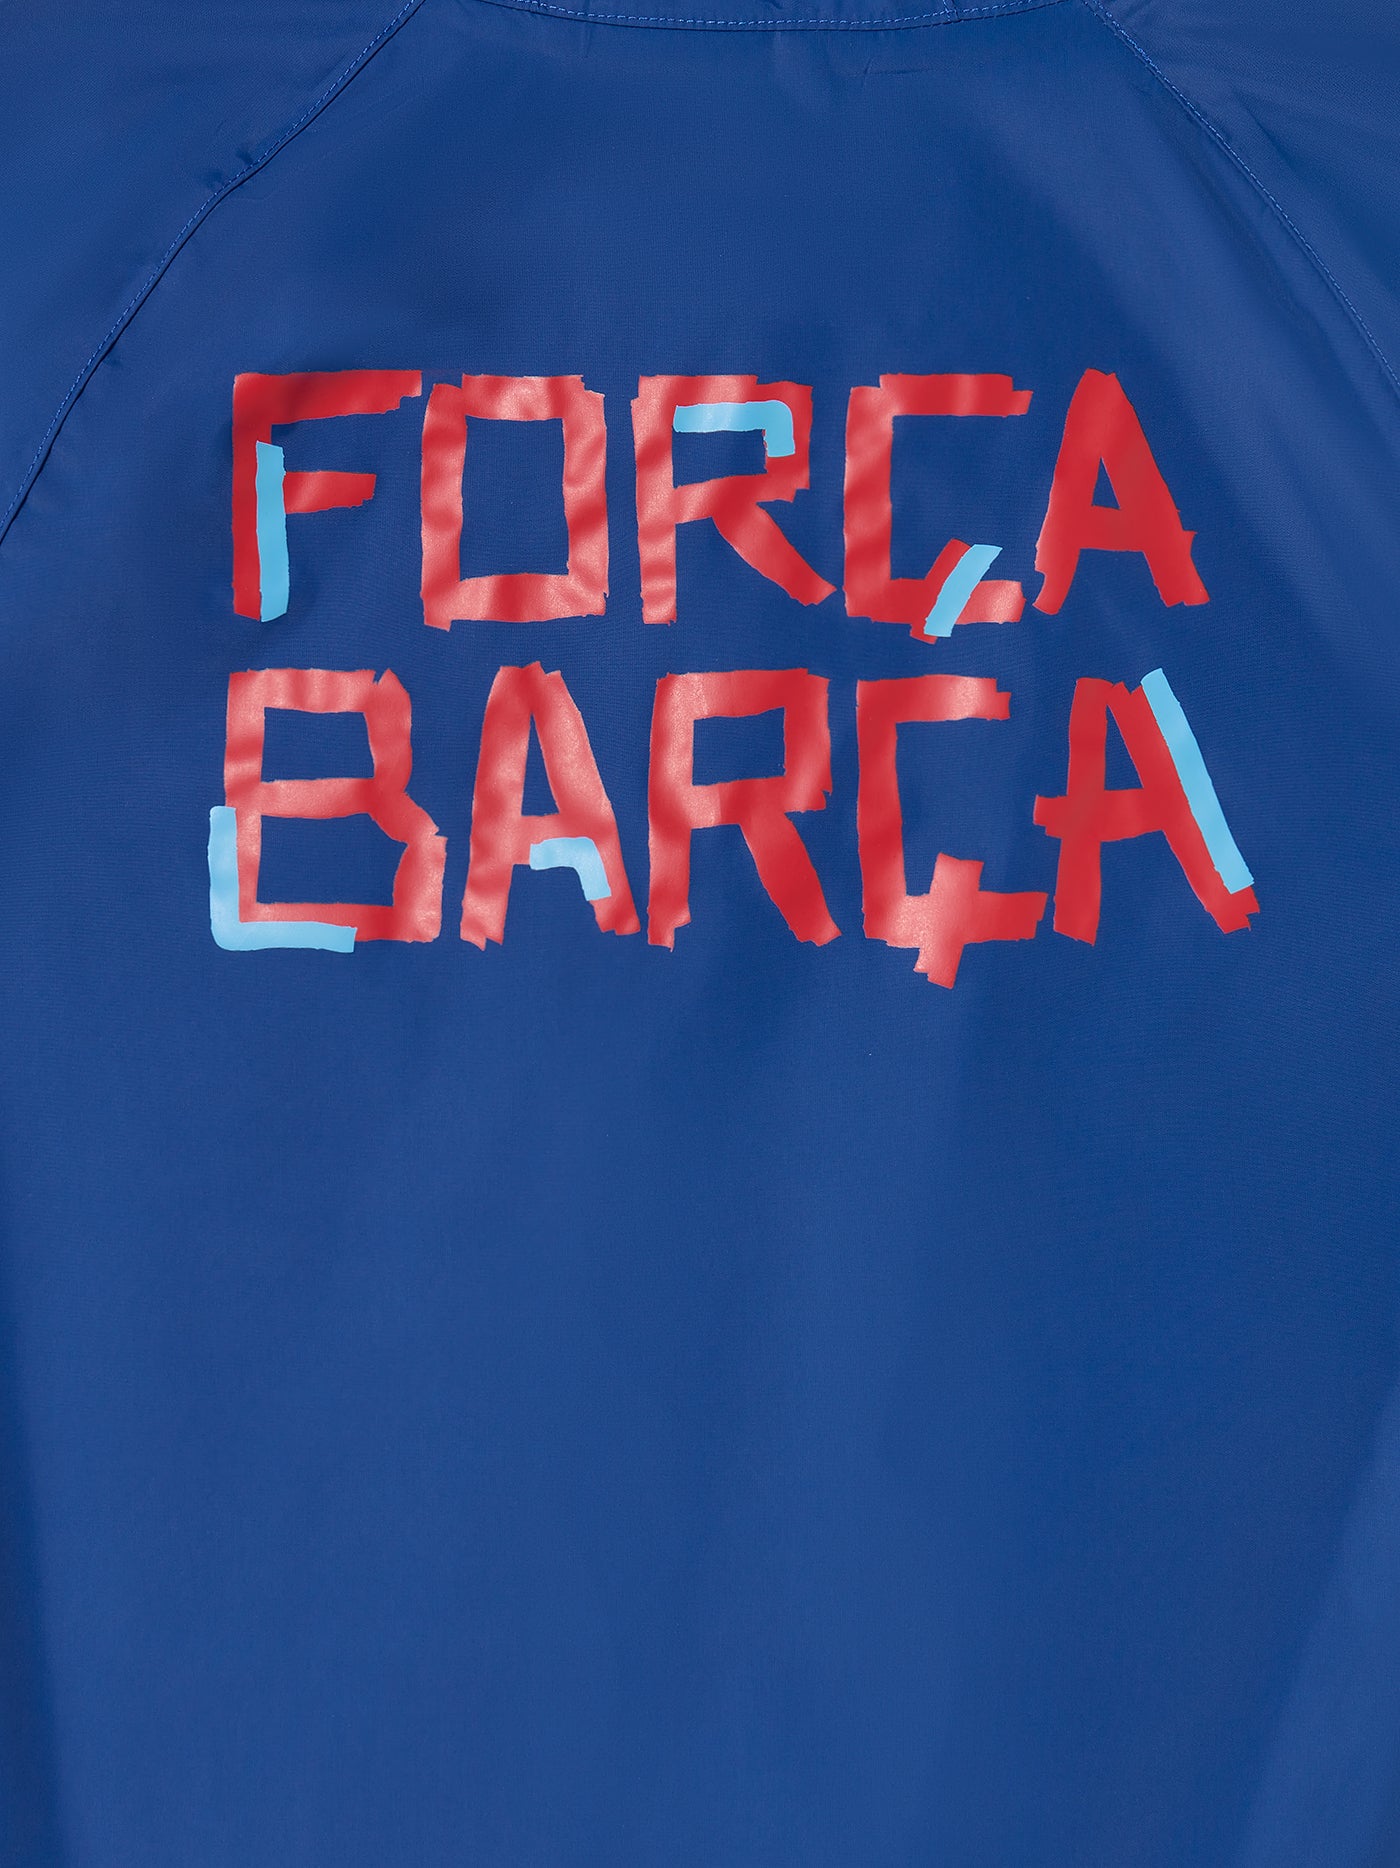 Waterproof jacket "Força Barça - Junior"